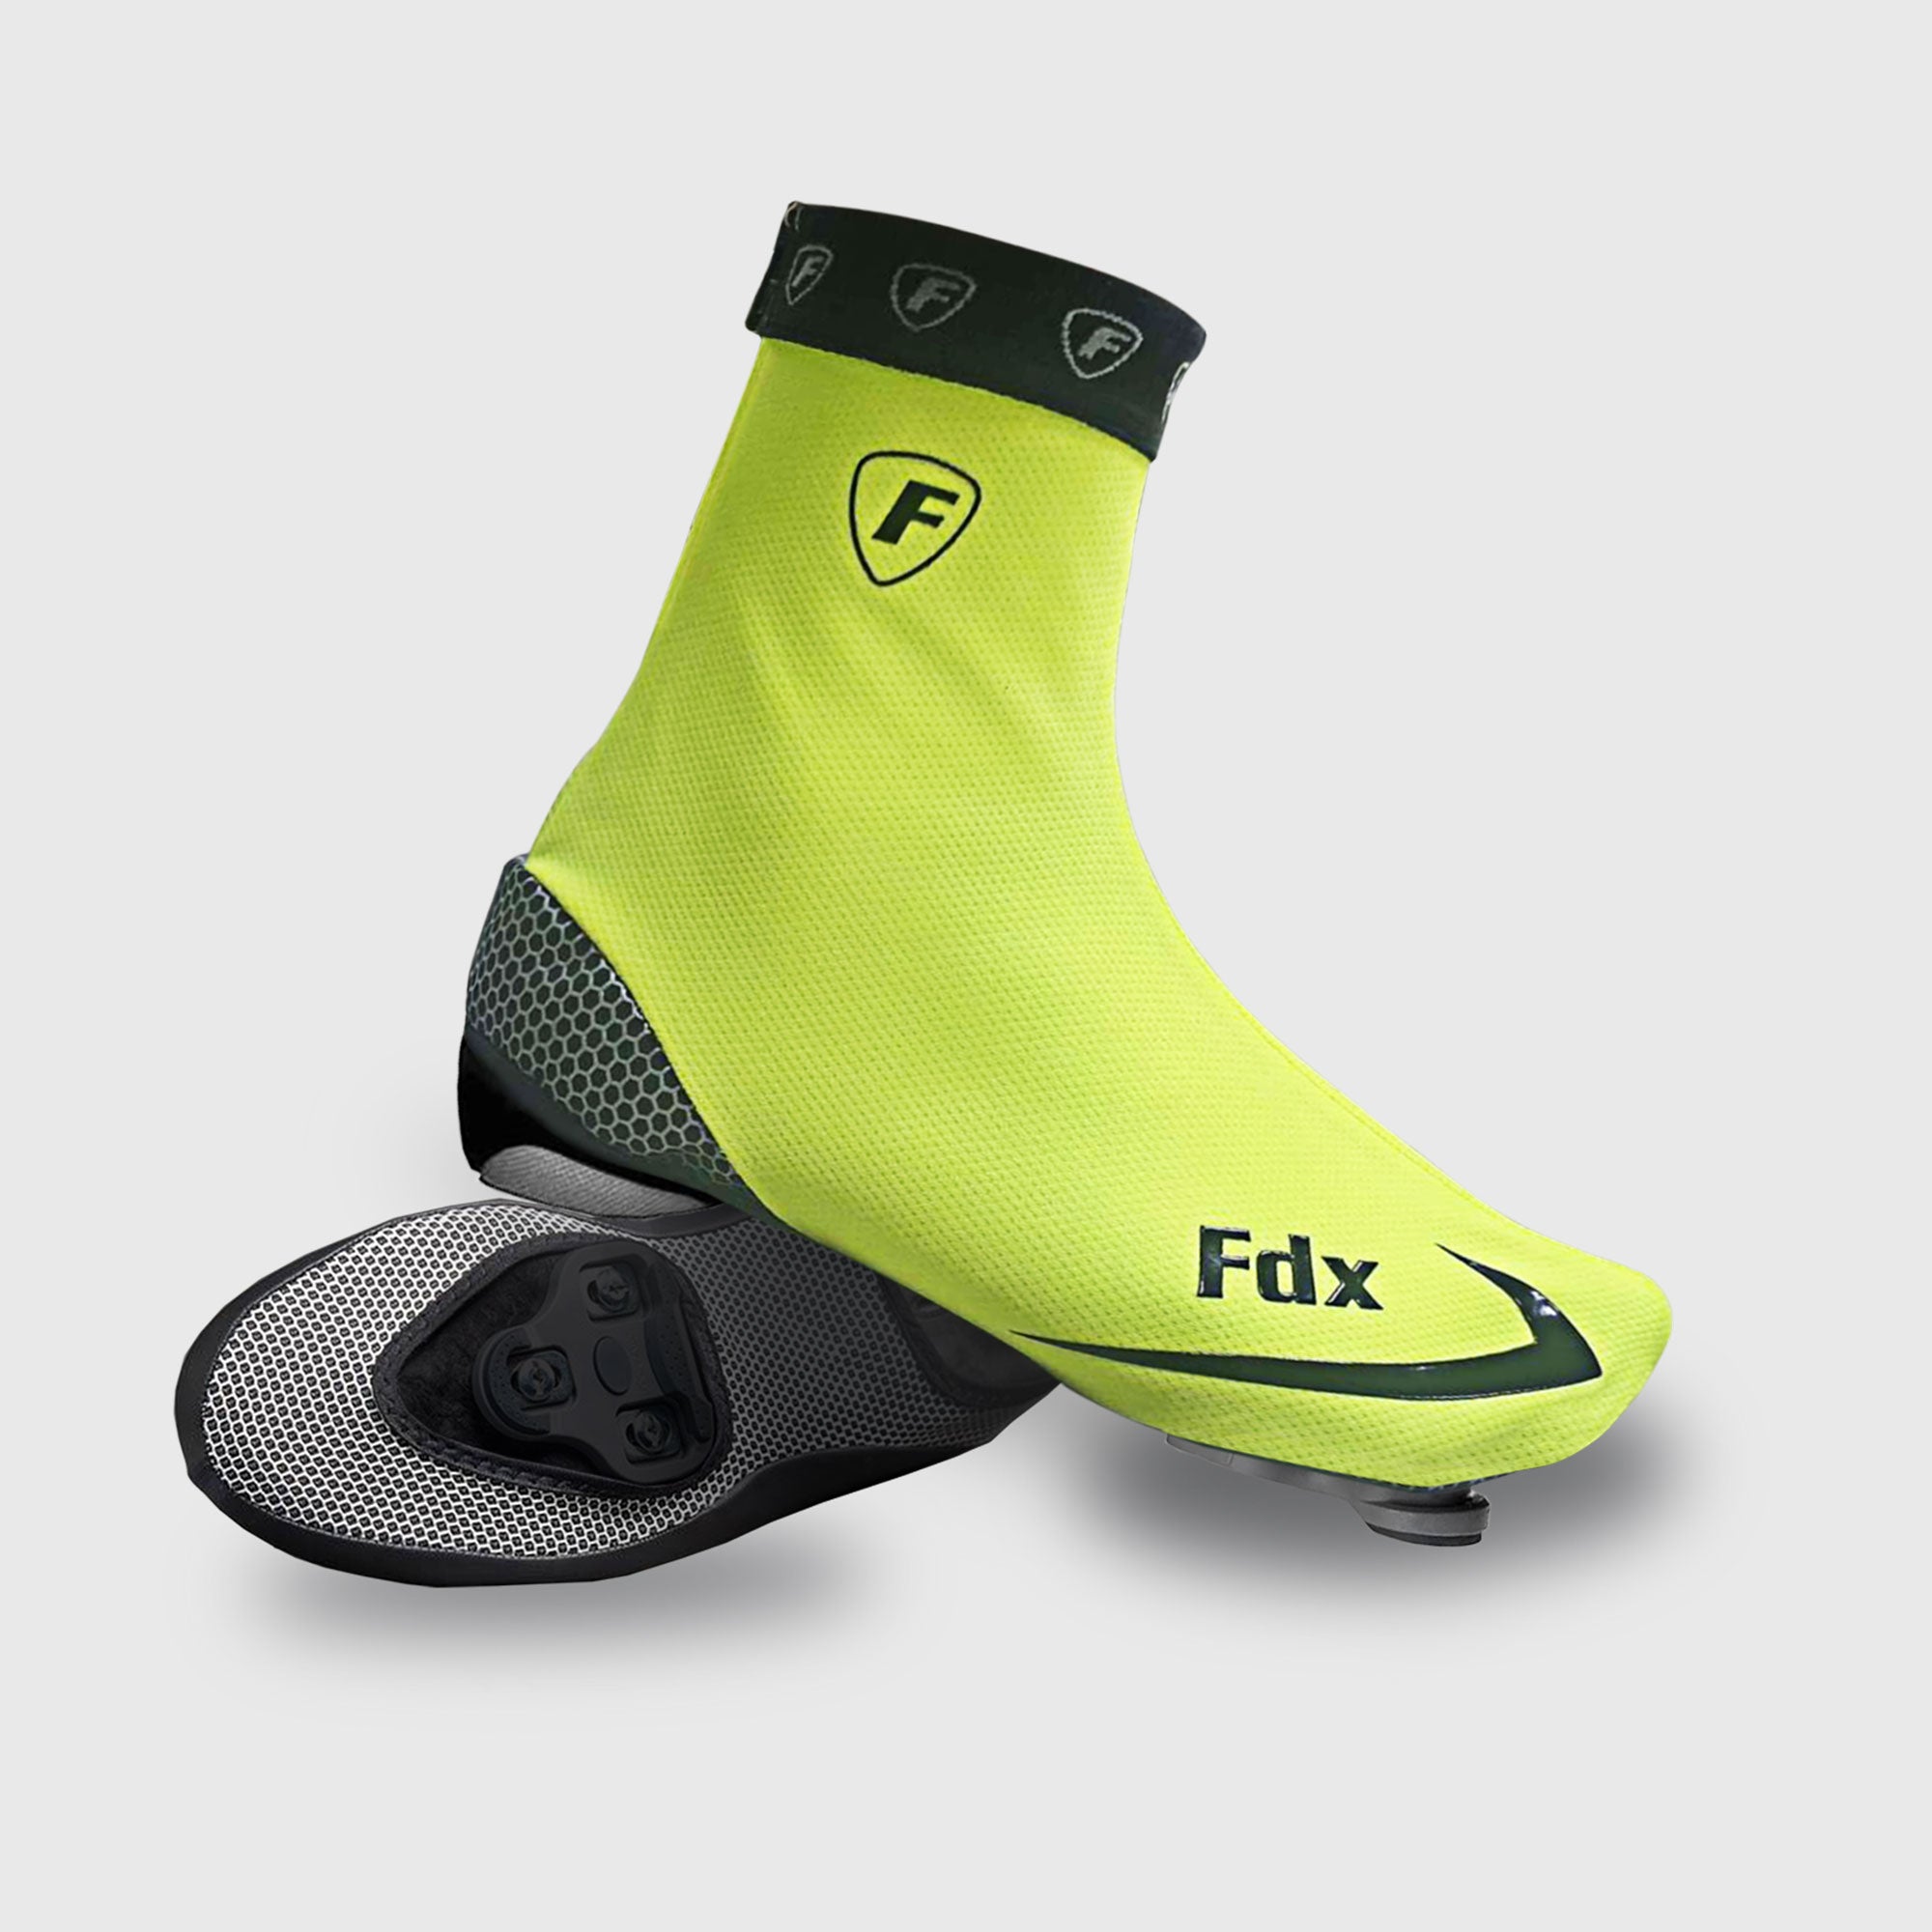 Fdx Unisex Fluorescent Yellow Cycling Over Shoe Breathable Lightweight Rainproof Hi Viz Reflective Details Men Women Cycling Gear AU